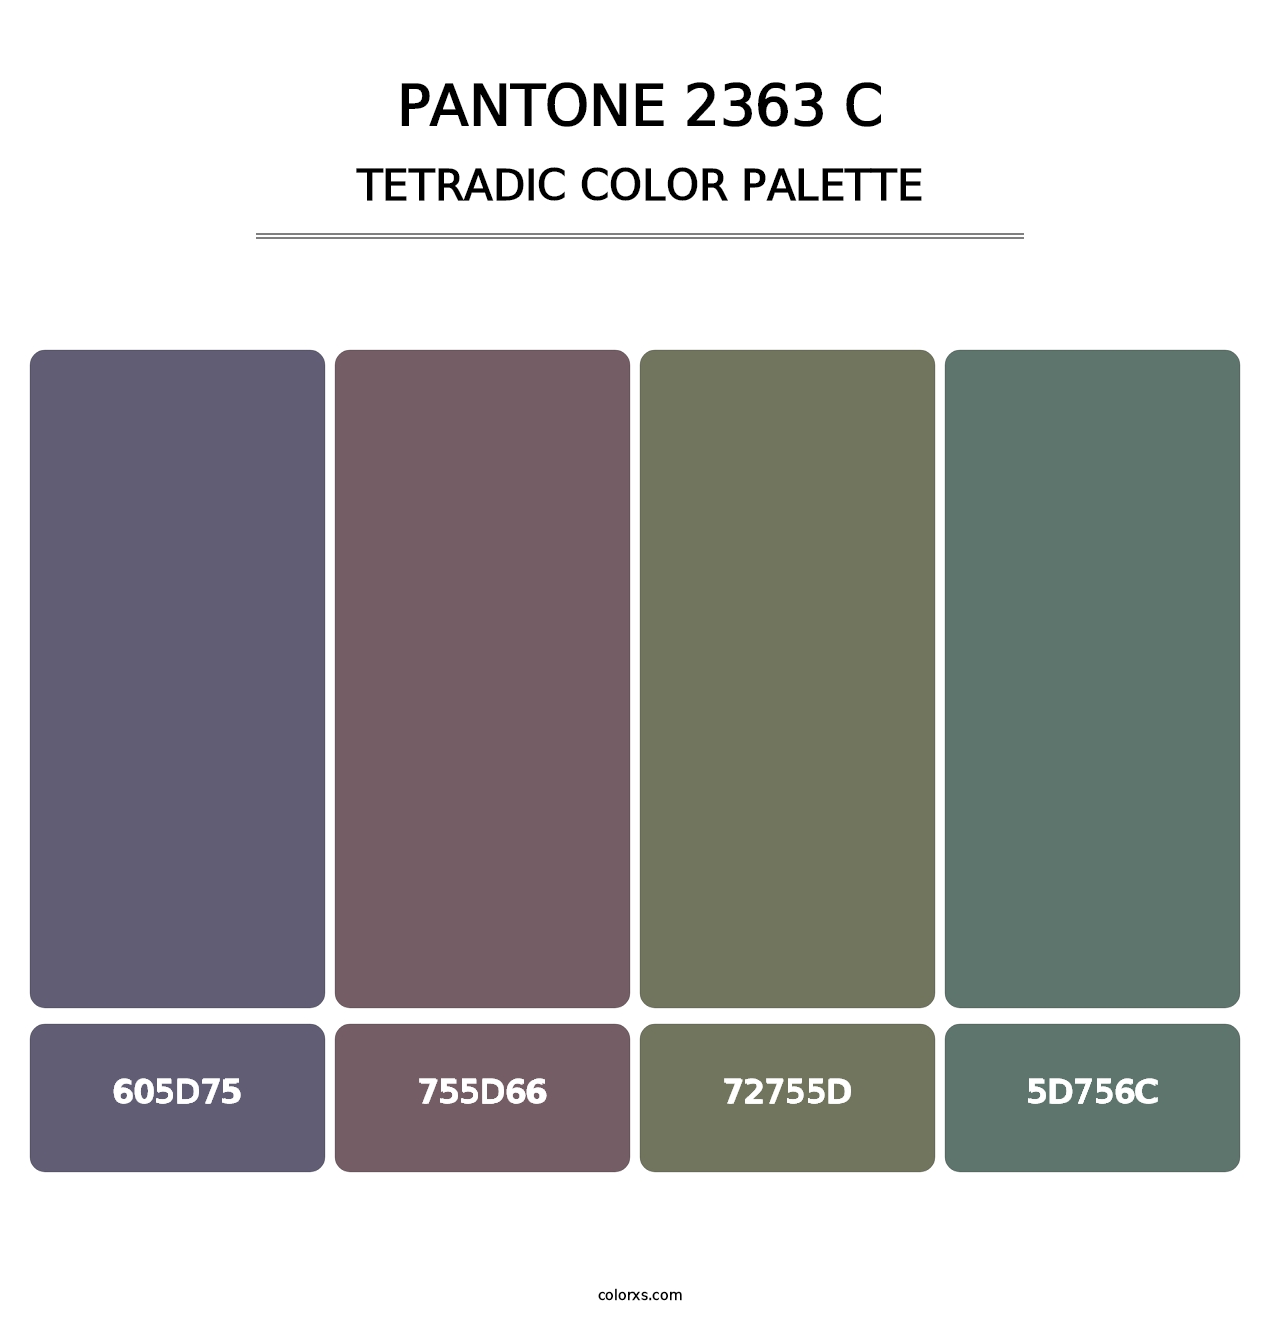 PANTONE 2363 C - Tetradic Color Palette